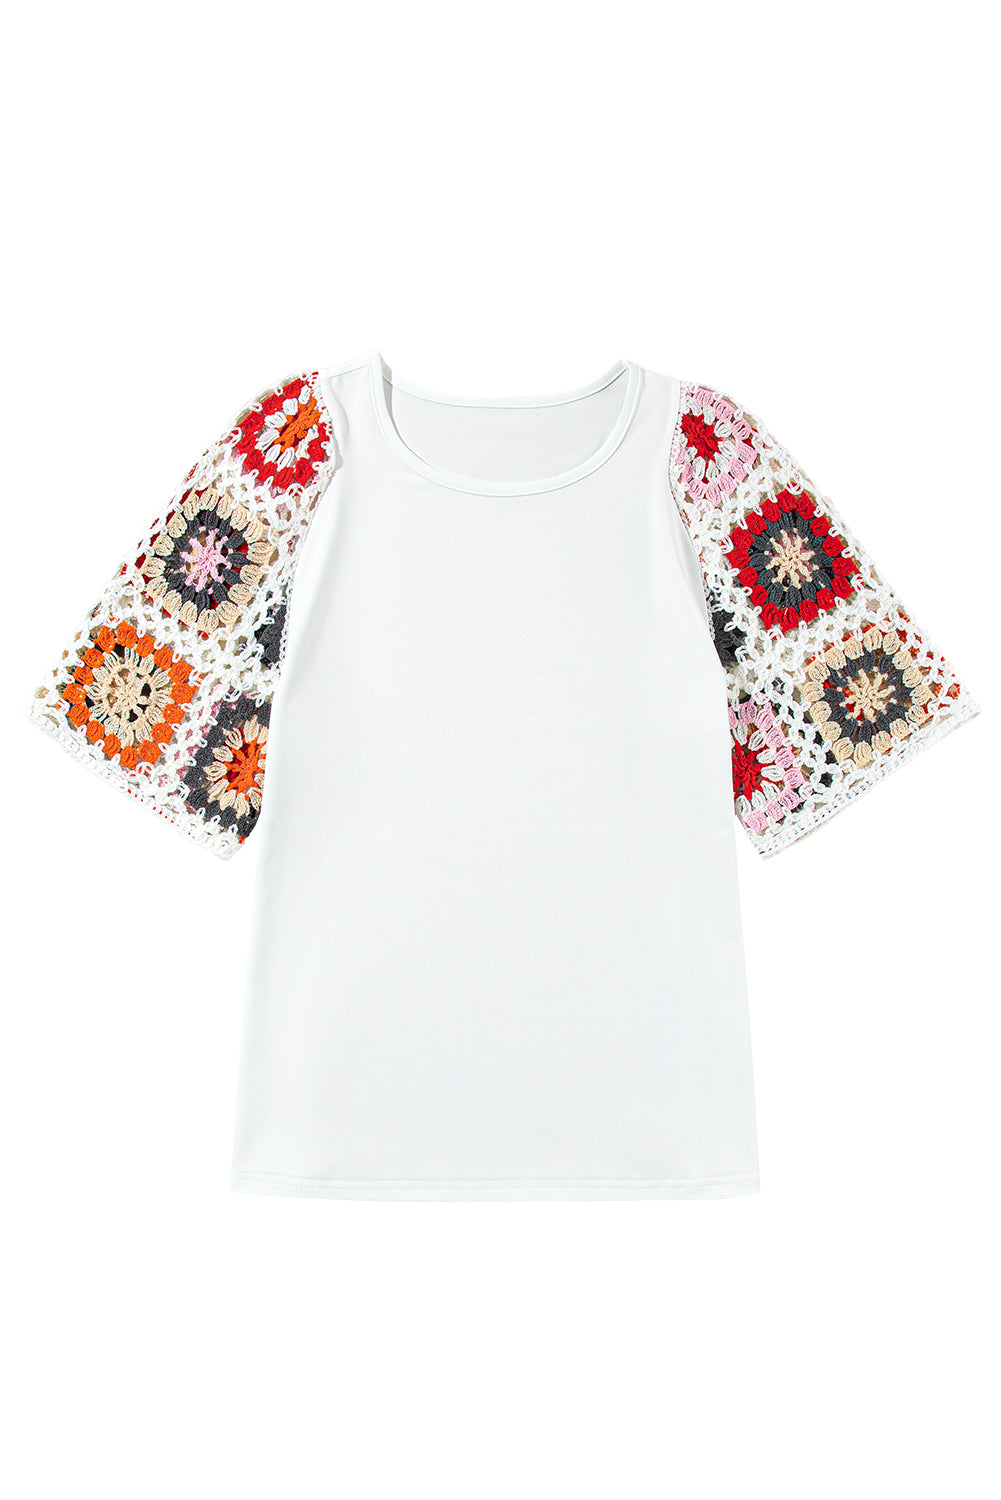 White Floral Crochet Short Sleeve Top